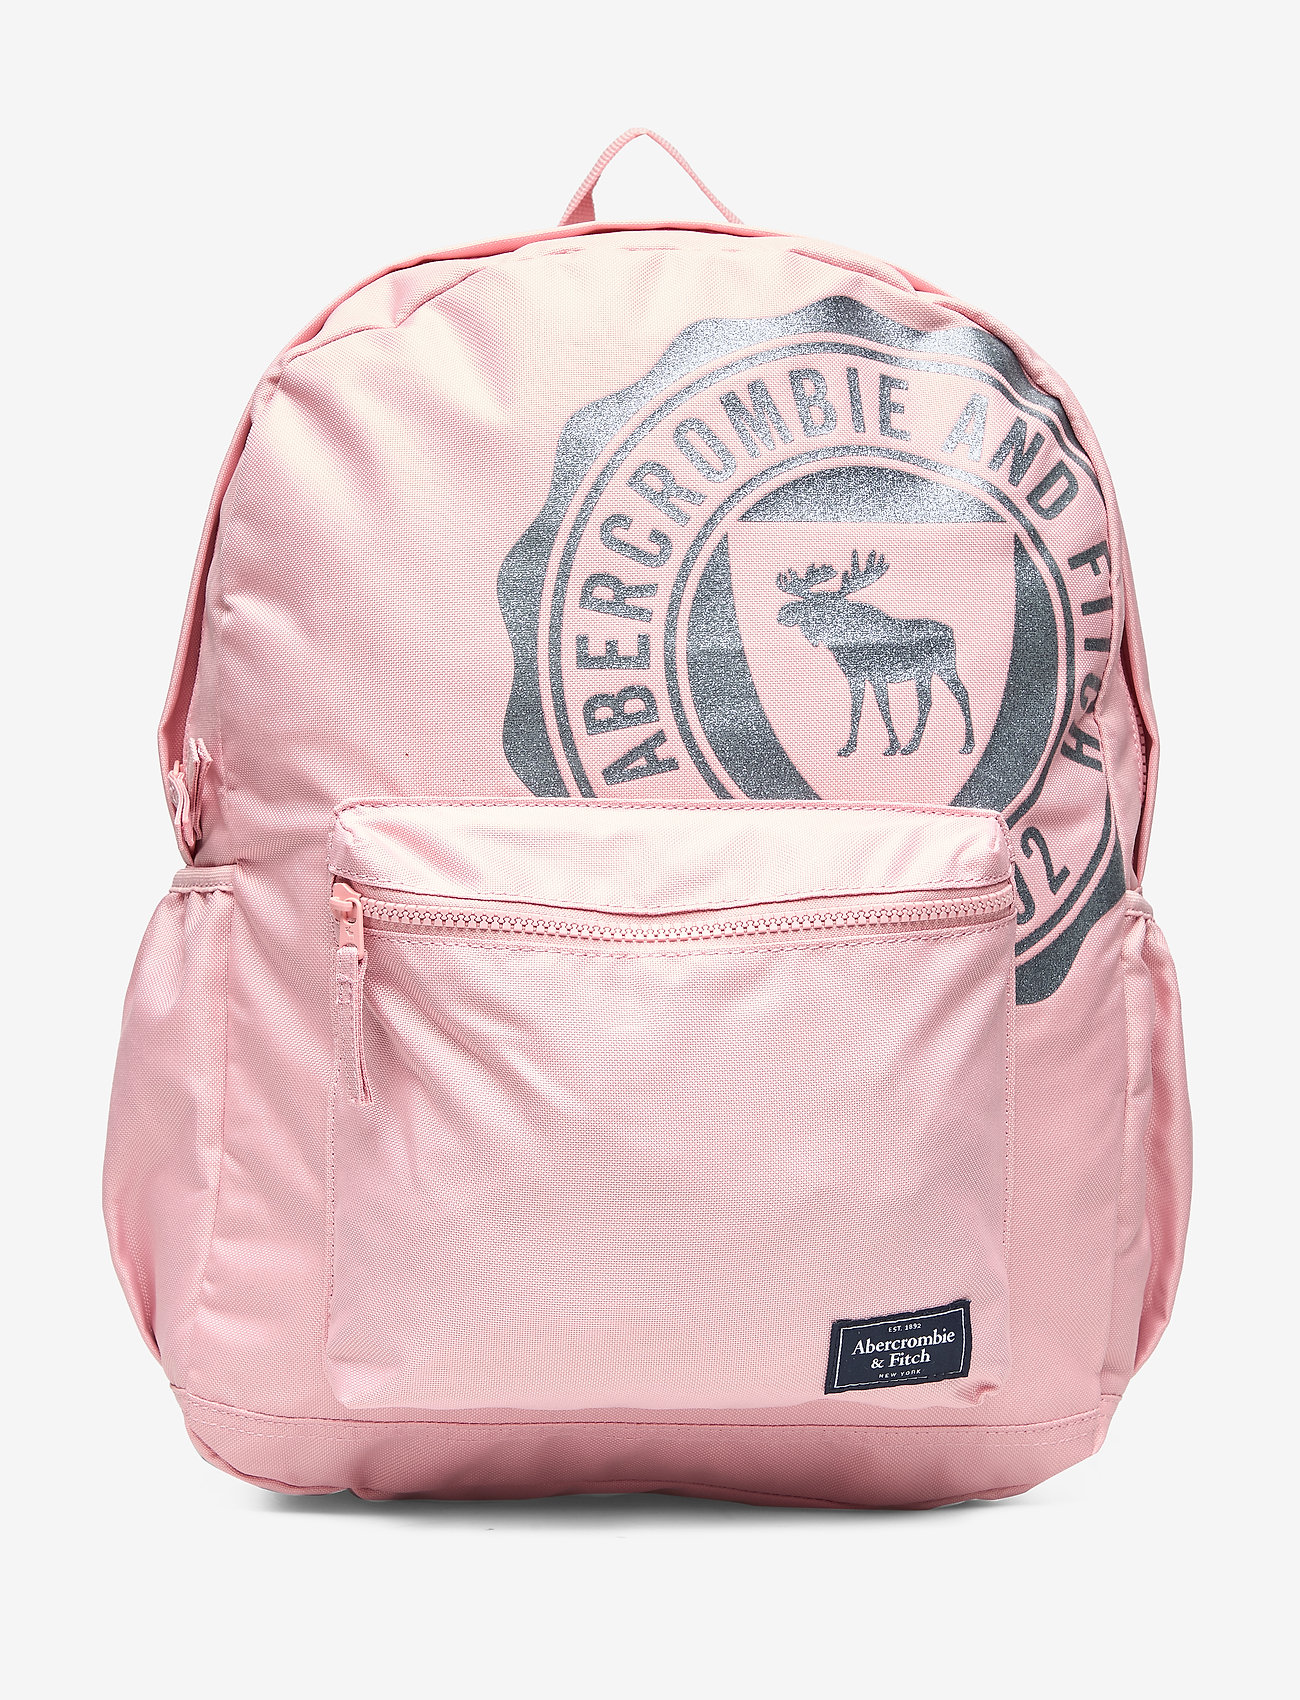 abercrombie kids backpacks